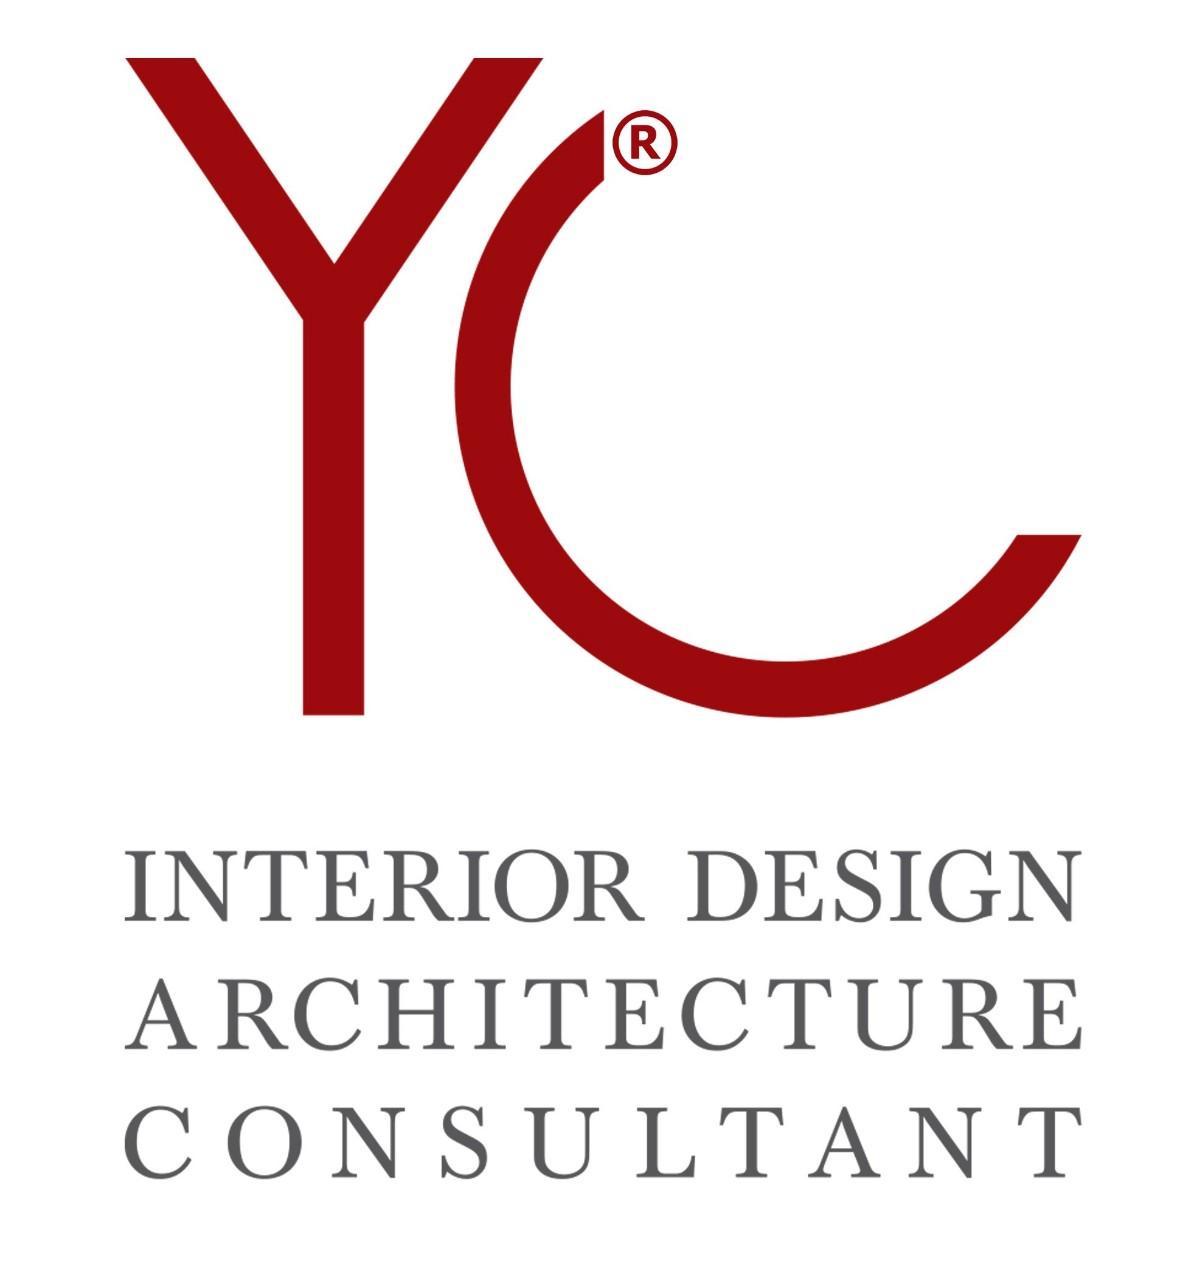 YC INTERIOR ARCHITECTURE CONSULTANT CO., LTD